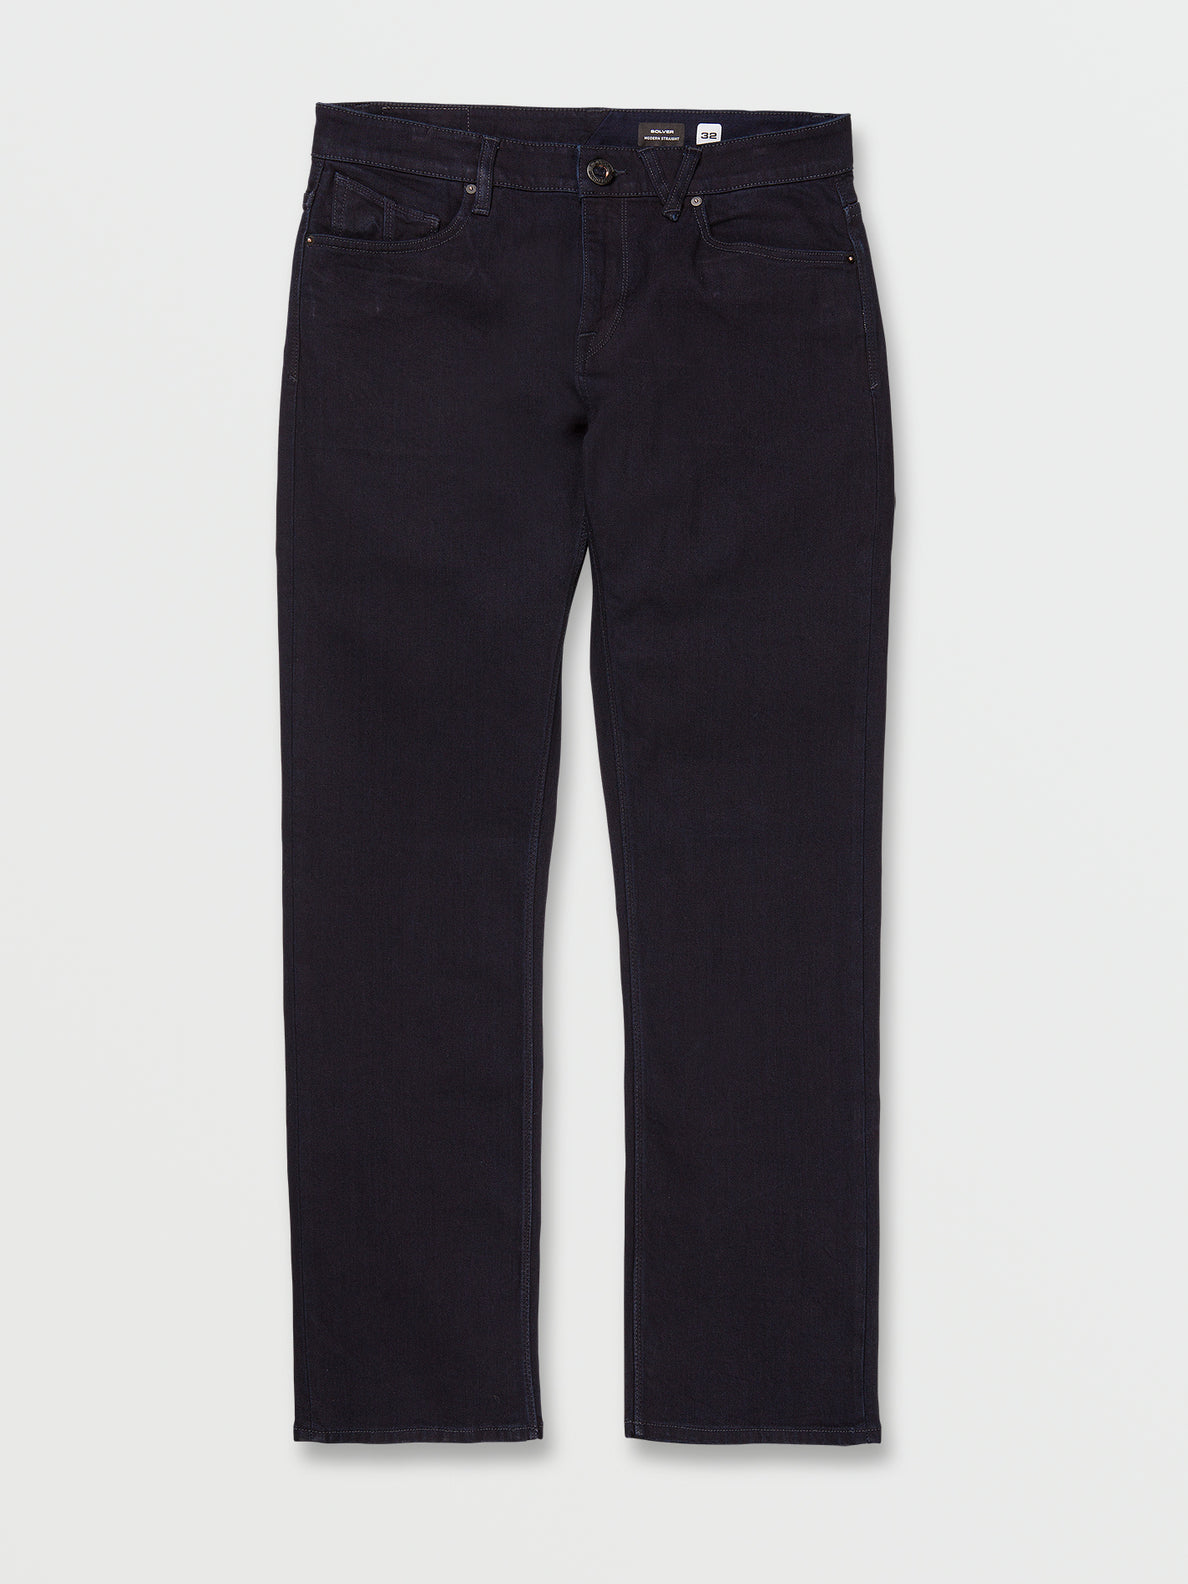 Solver Modern Fit Jeans - Twilight Black (A1912303_TWI) [F]